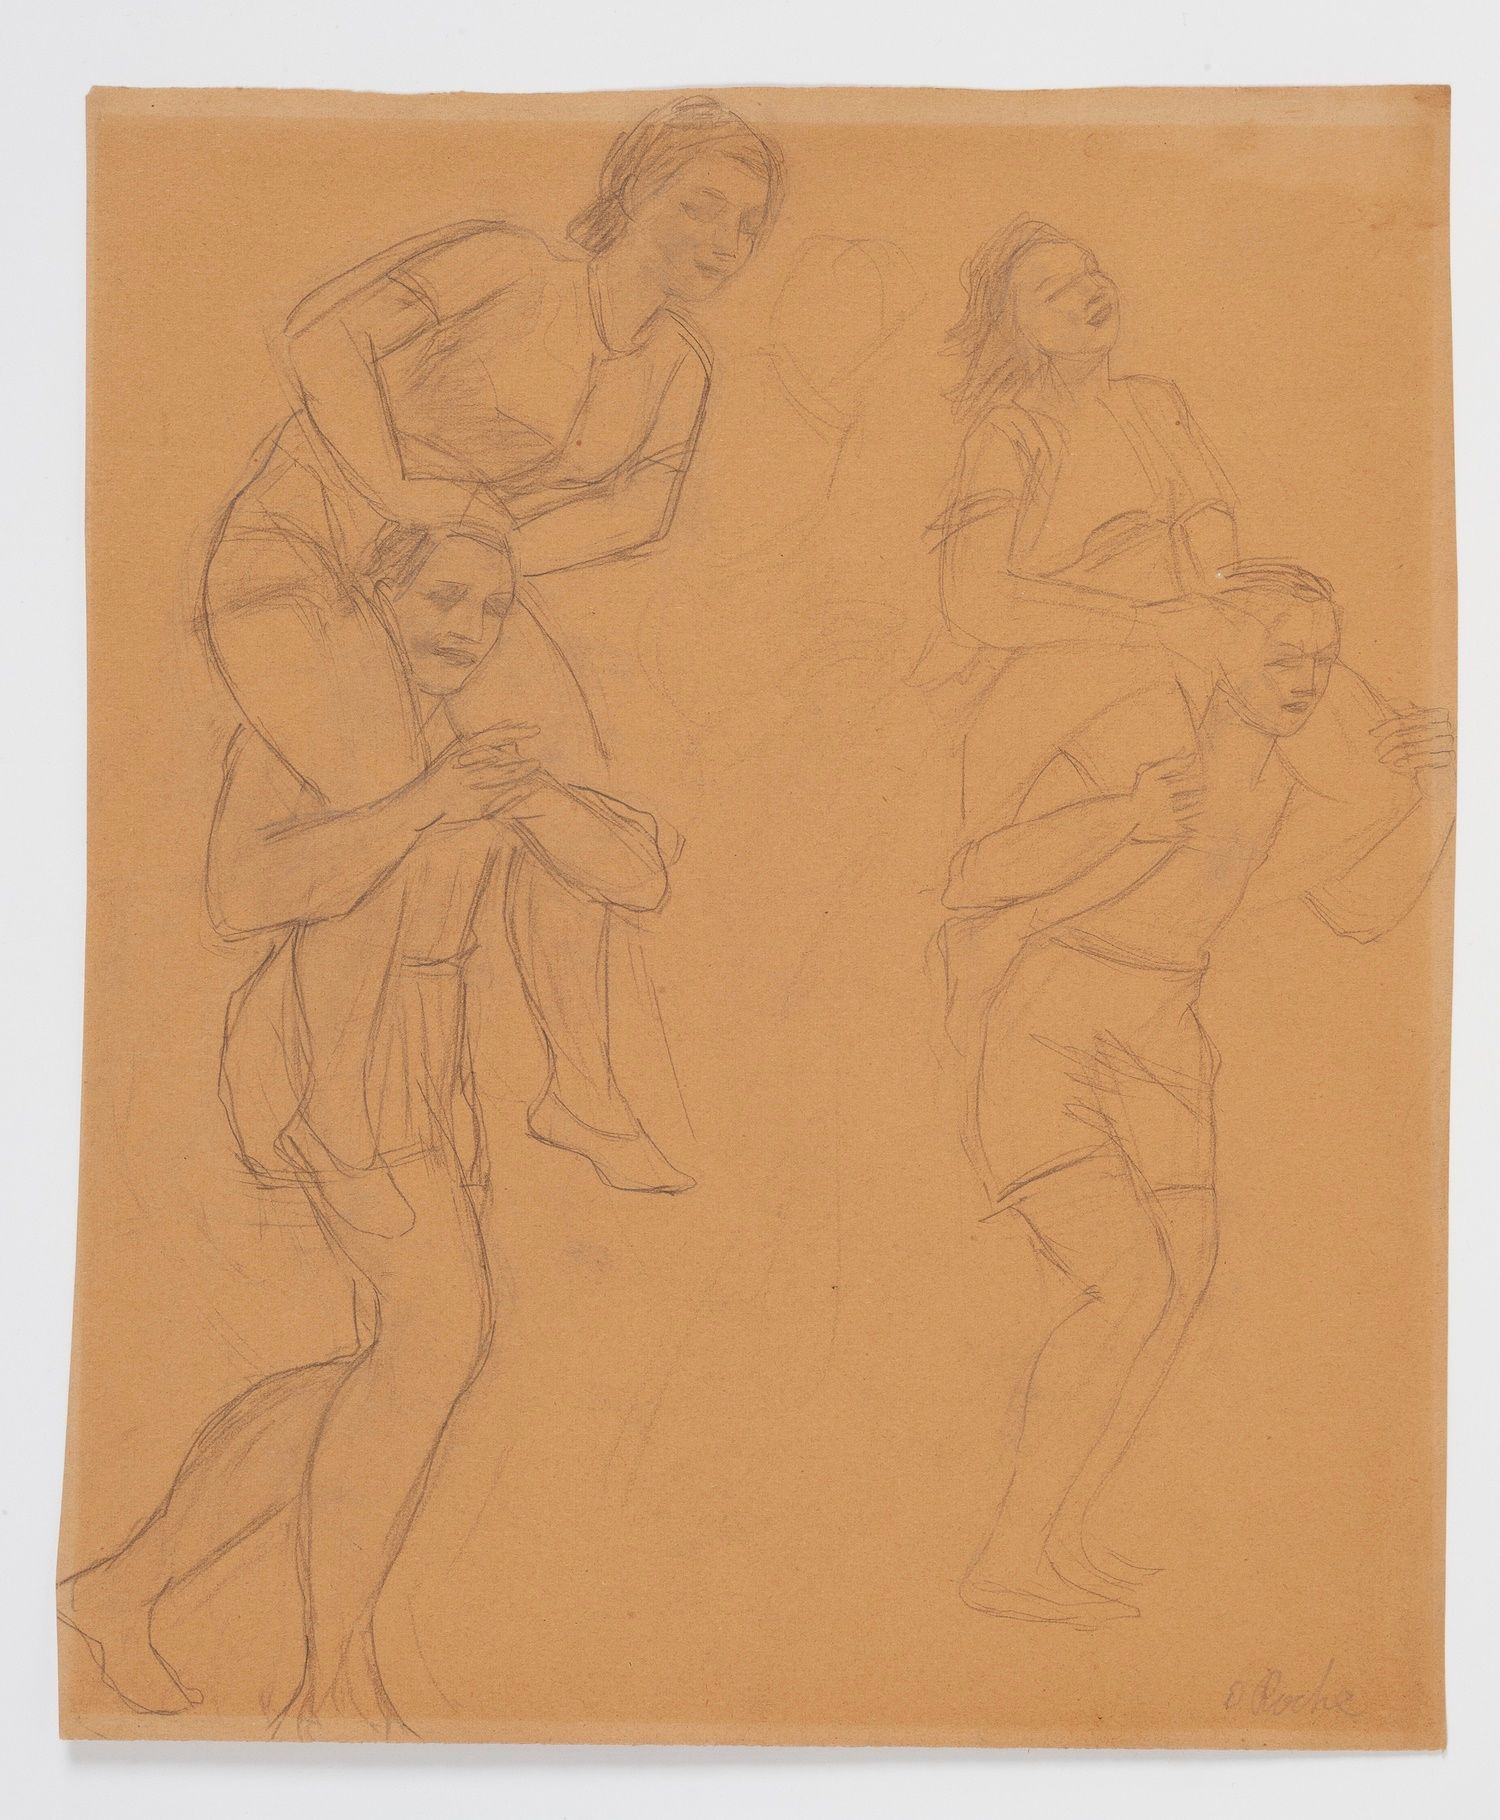 Null 奥迪隆-罗切(1868-1947)

对身体的研究

铅笔画在牛皮纸上，右下方有签名。

32 x 26,5.